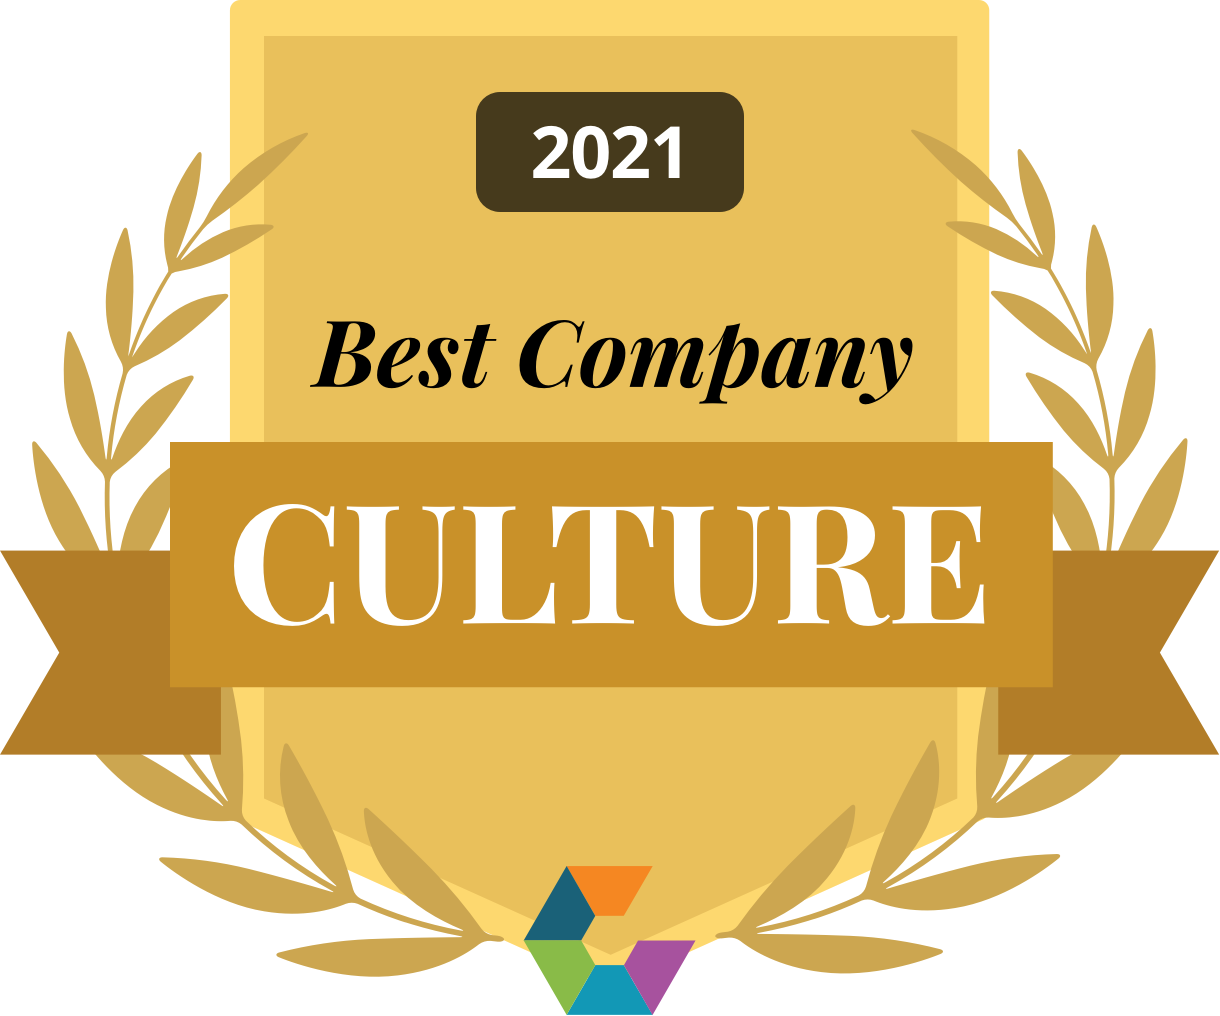 Best Company Culture award